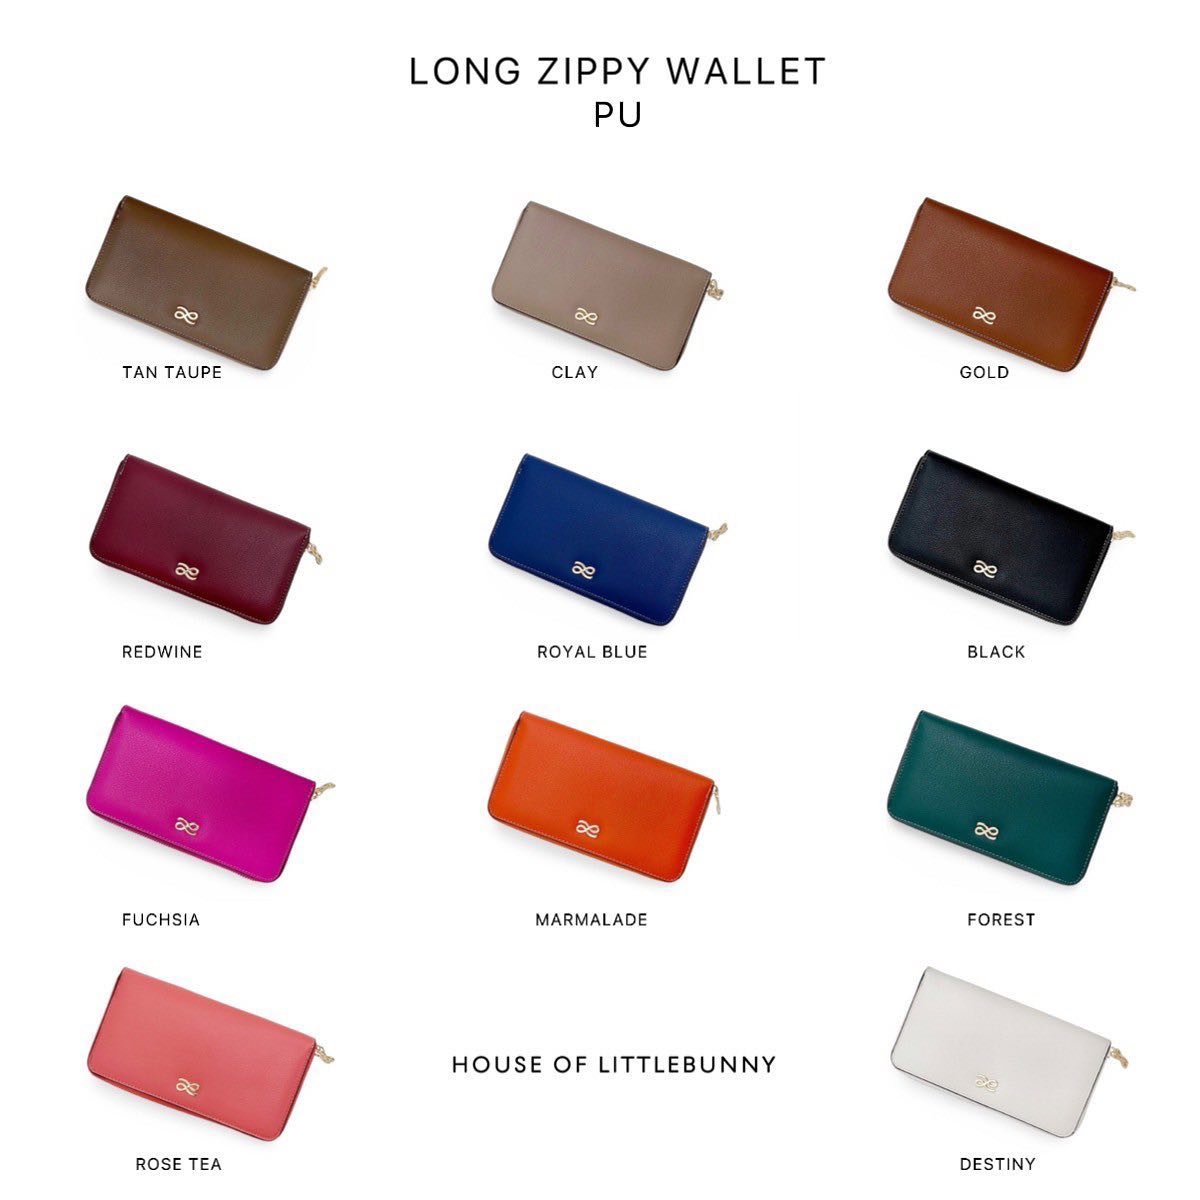 HOLB - Long Zippy Wallet PU Tan Taupe